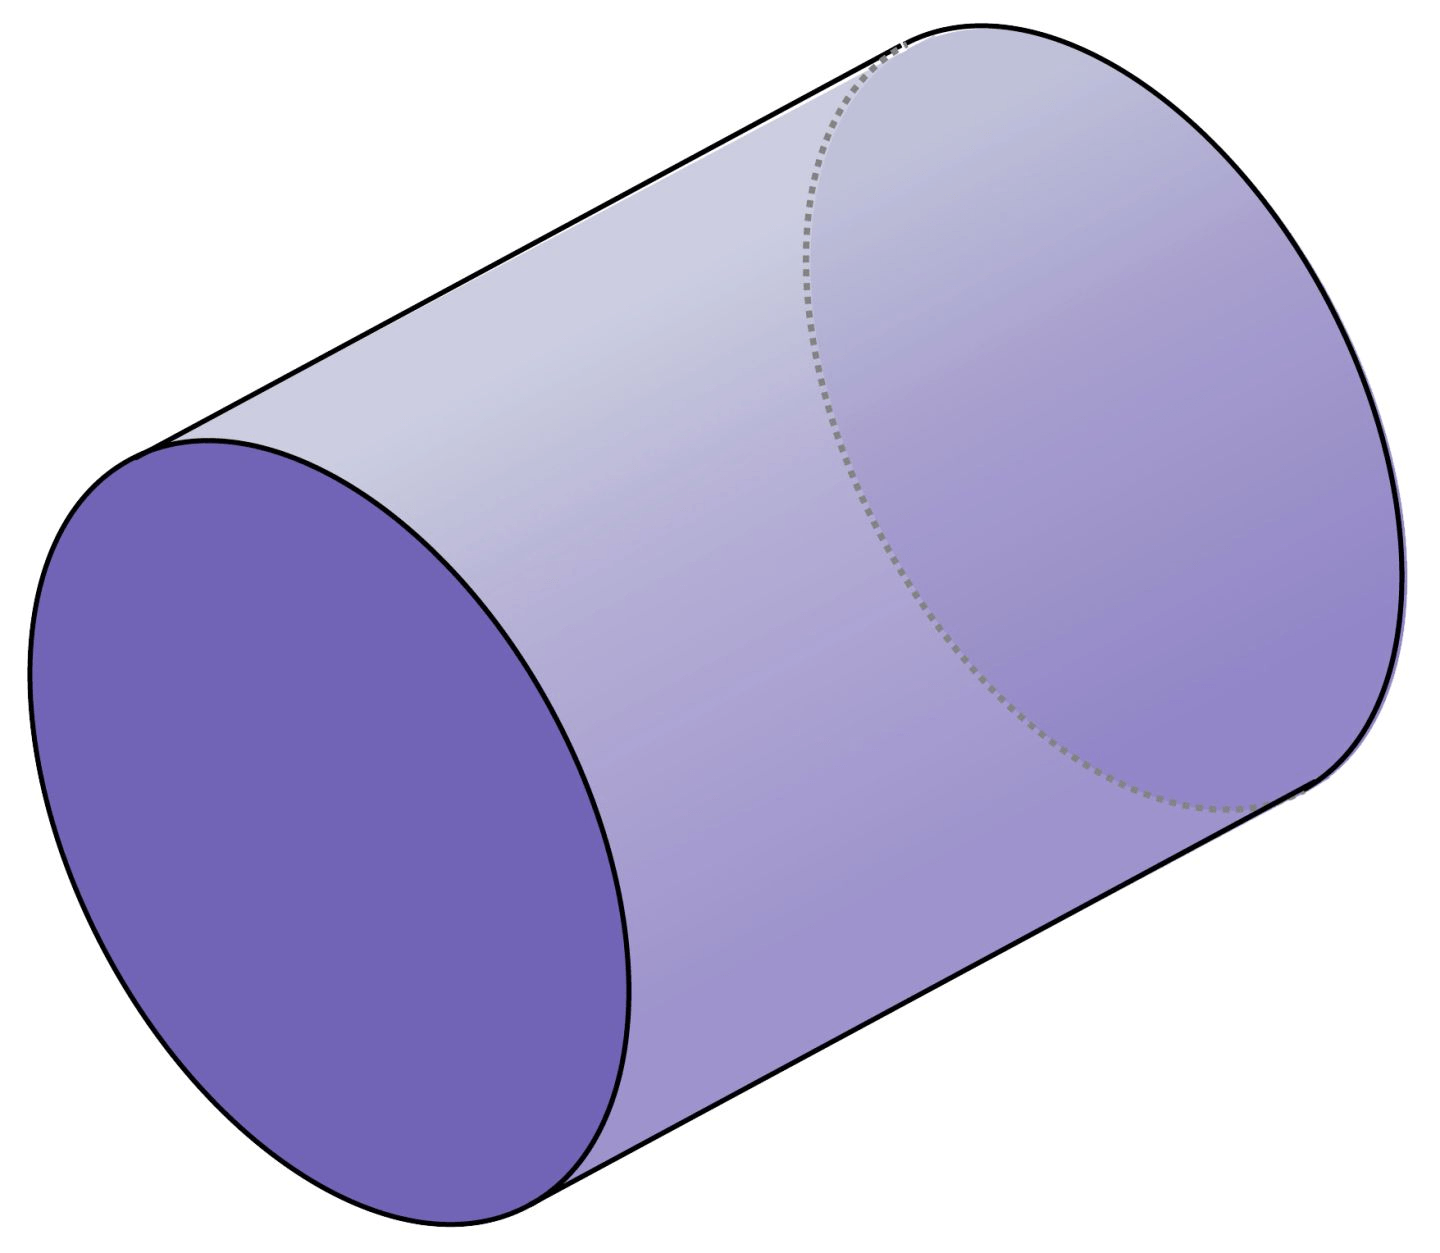 Volume of a Cylinder - Class 8 - Quizizz